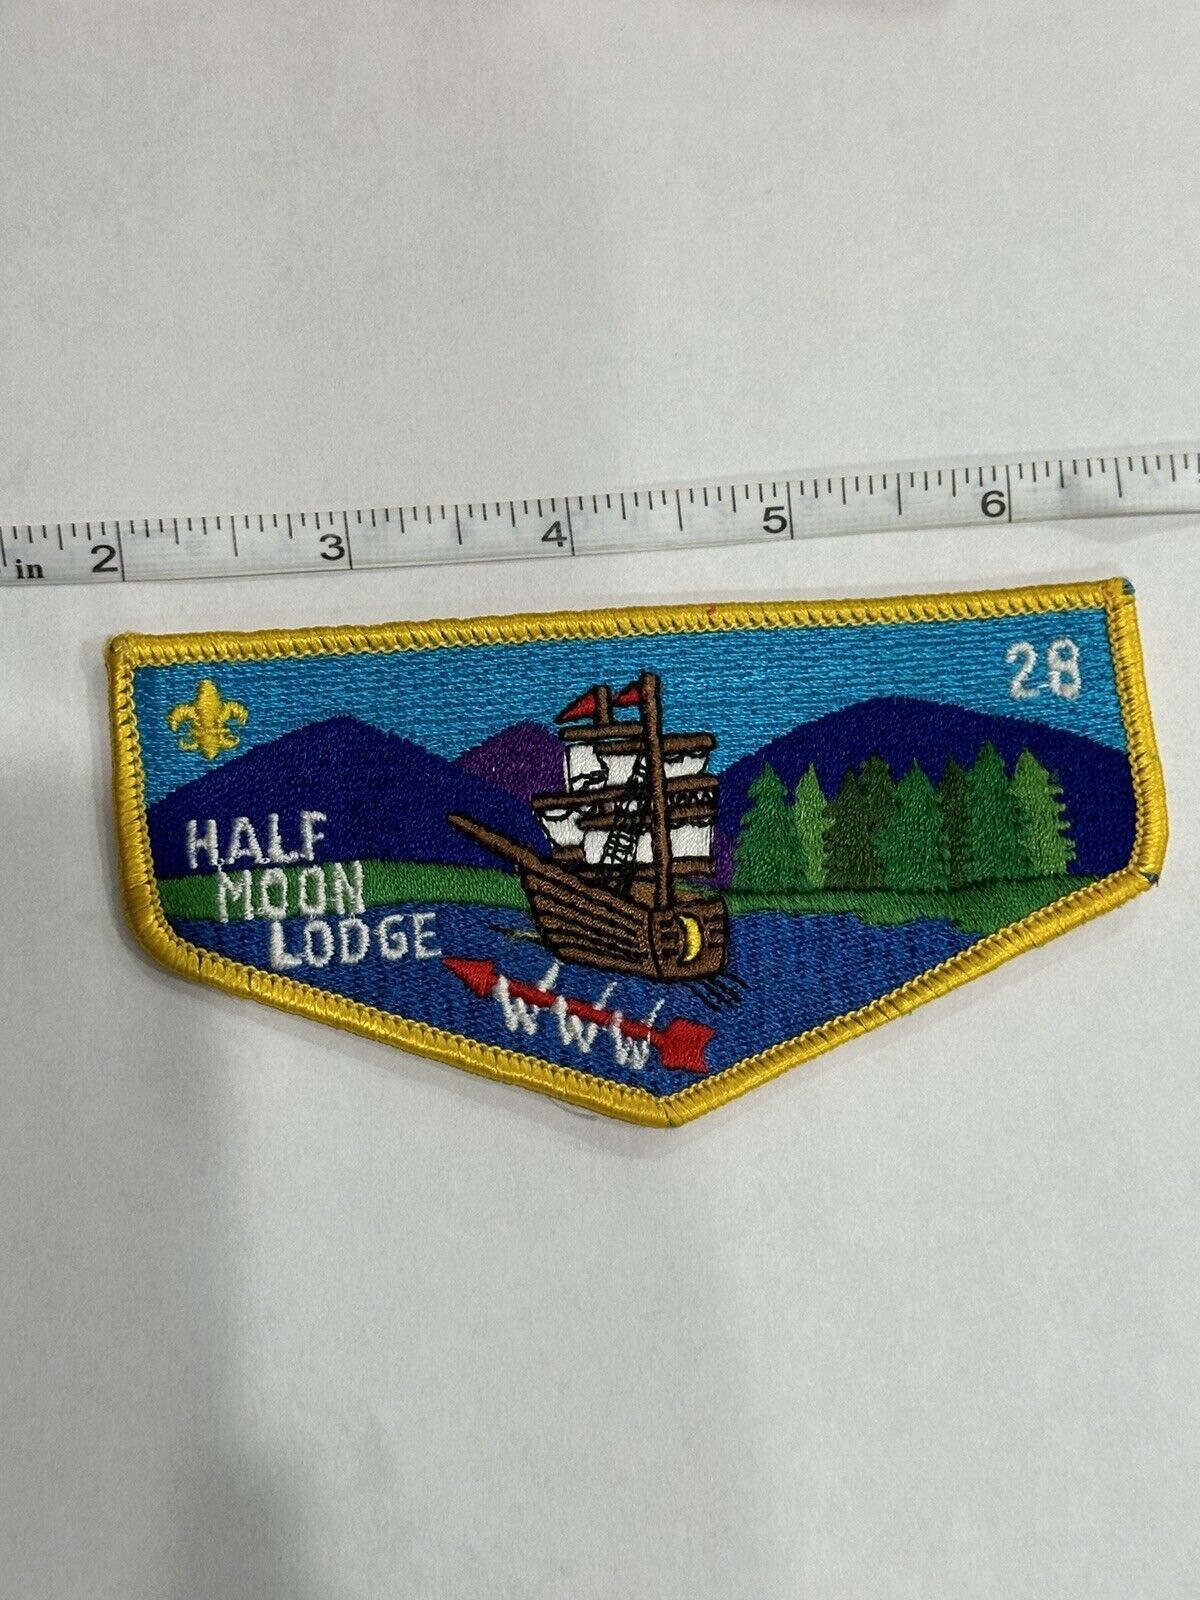 Vintage BSA Half moon lodge Patch 2B